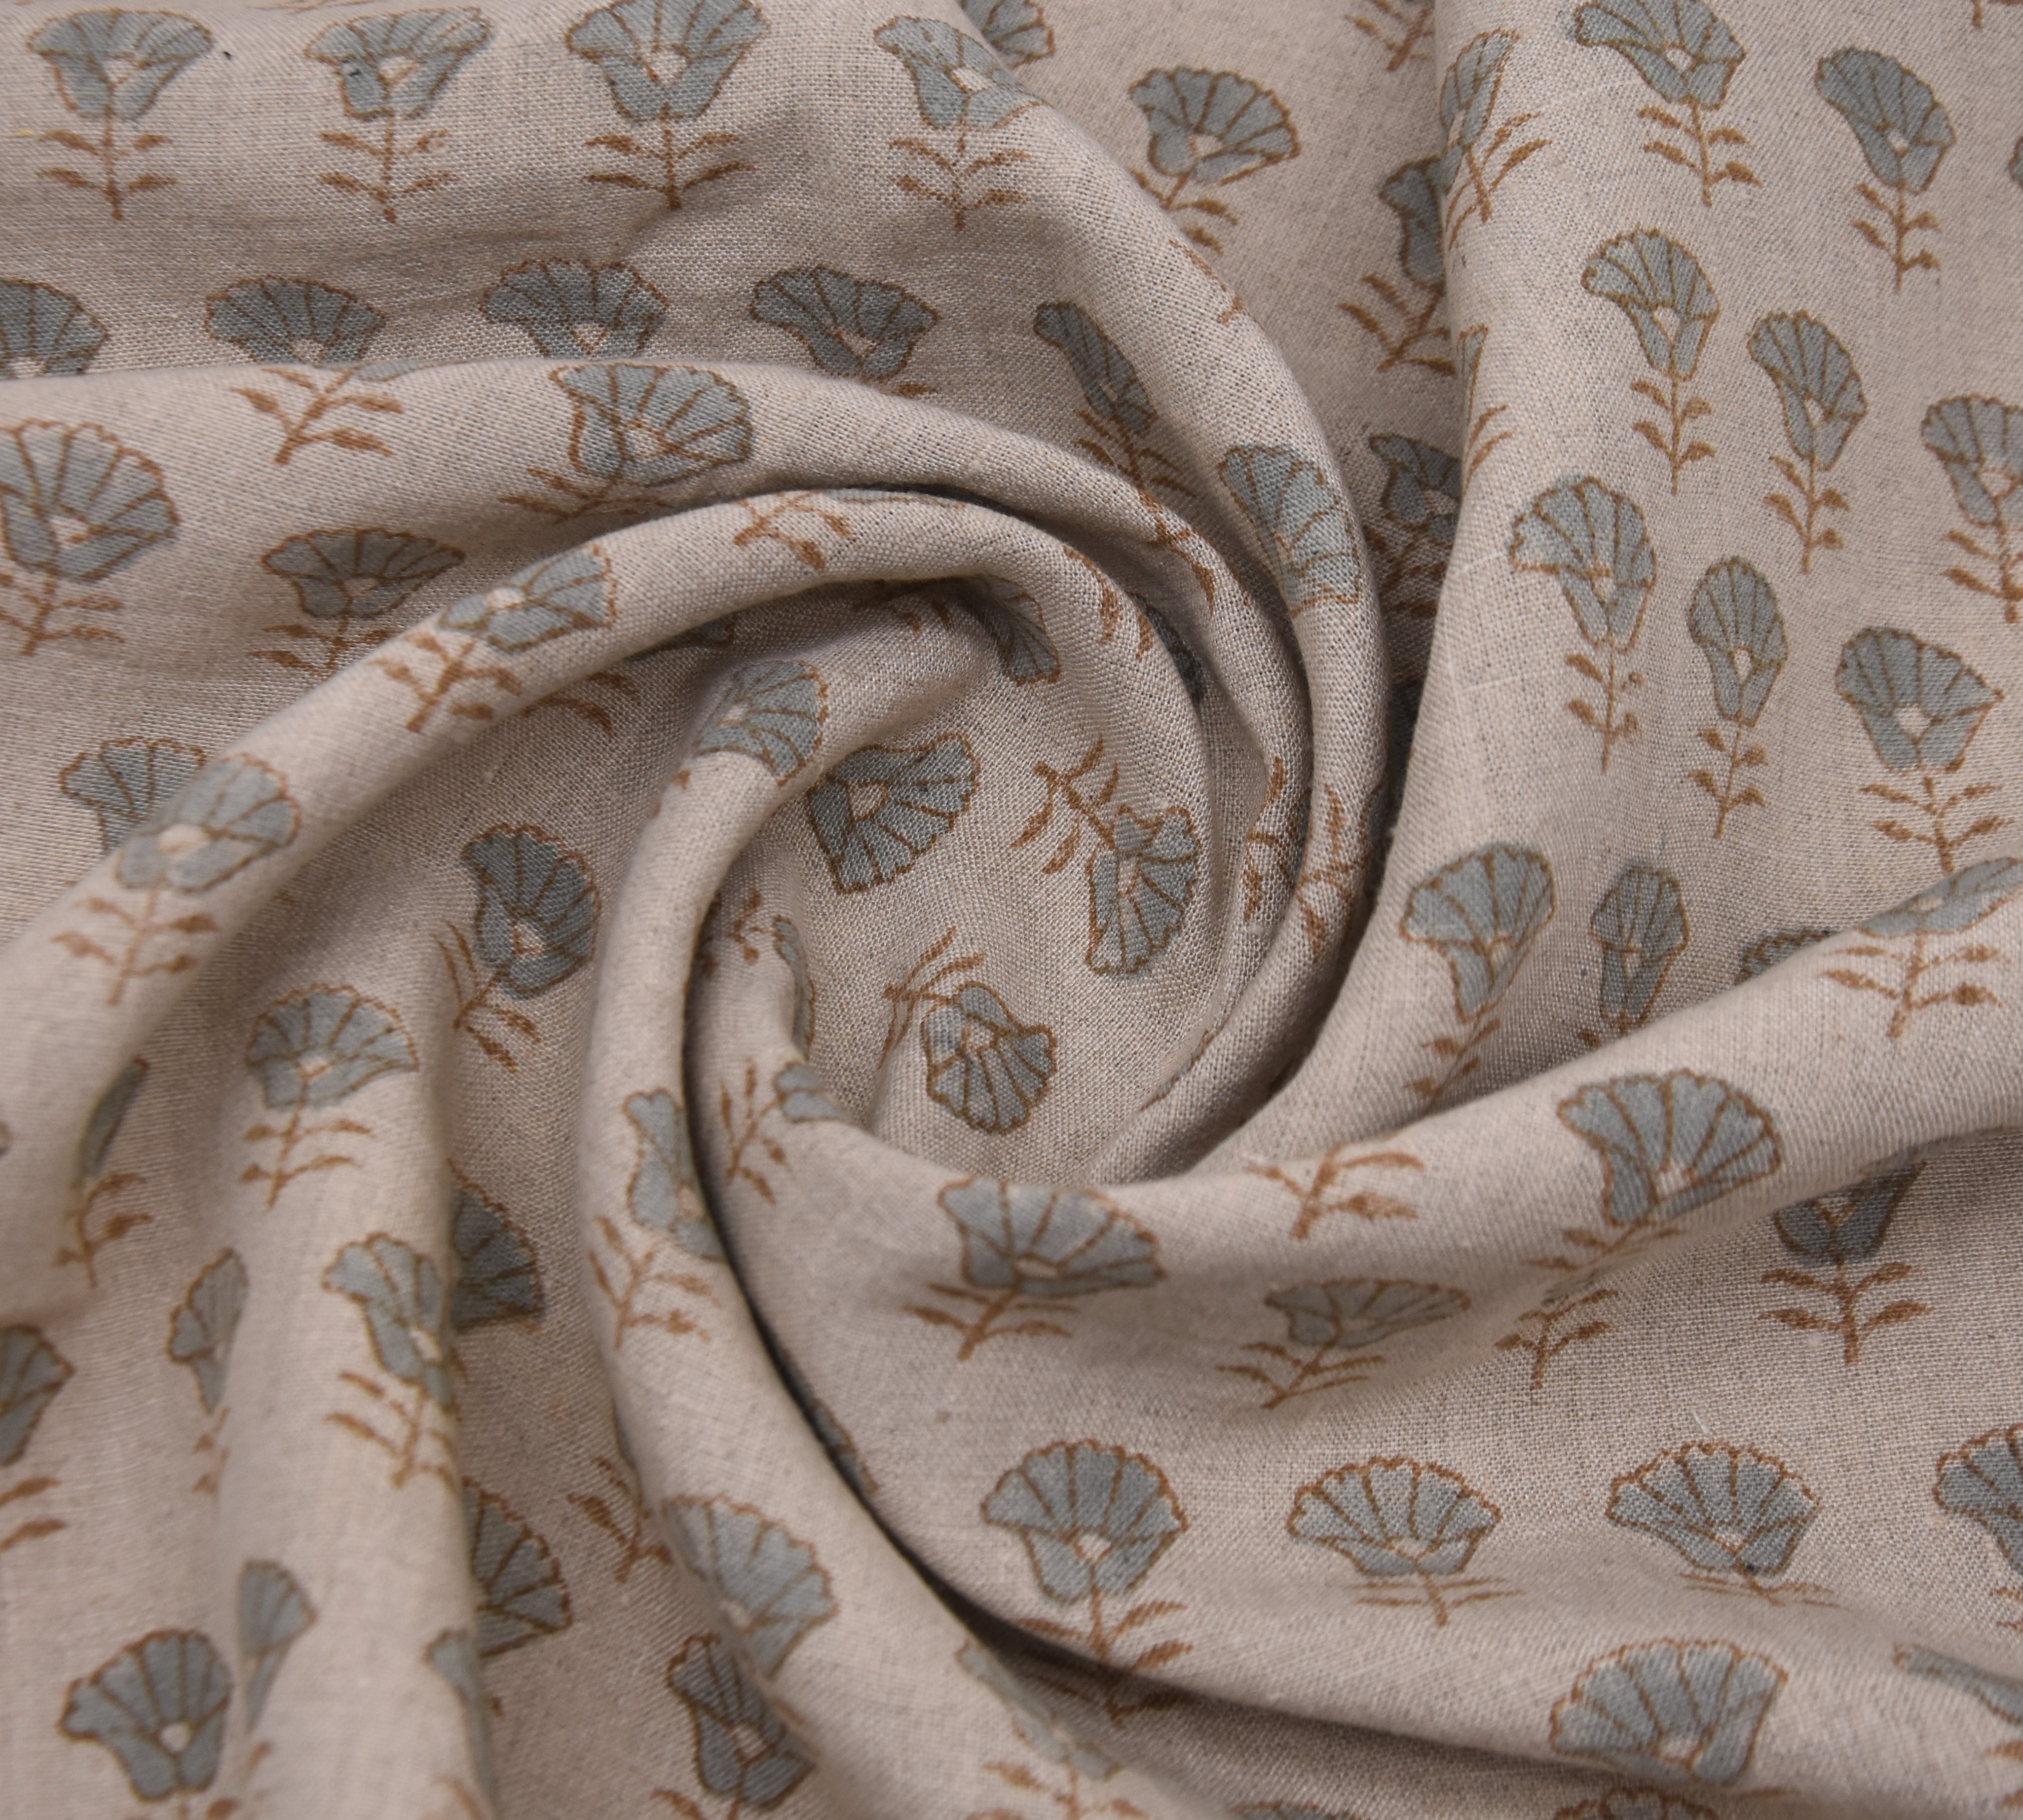 Hand block window curtains, upholstery fabric for pillows, pure linen 58" wide, hand block print, handmade floral art - KOHINOOR